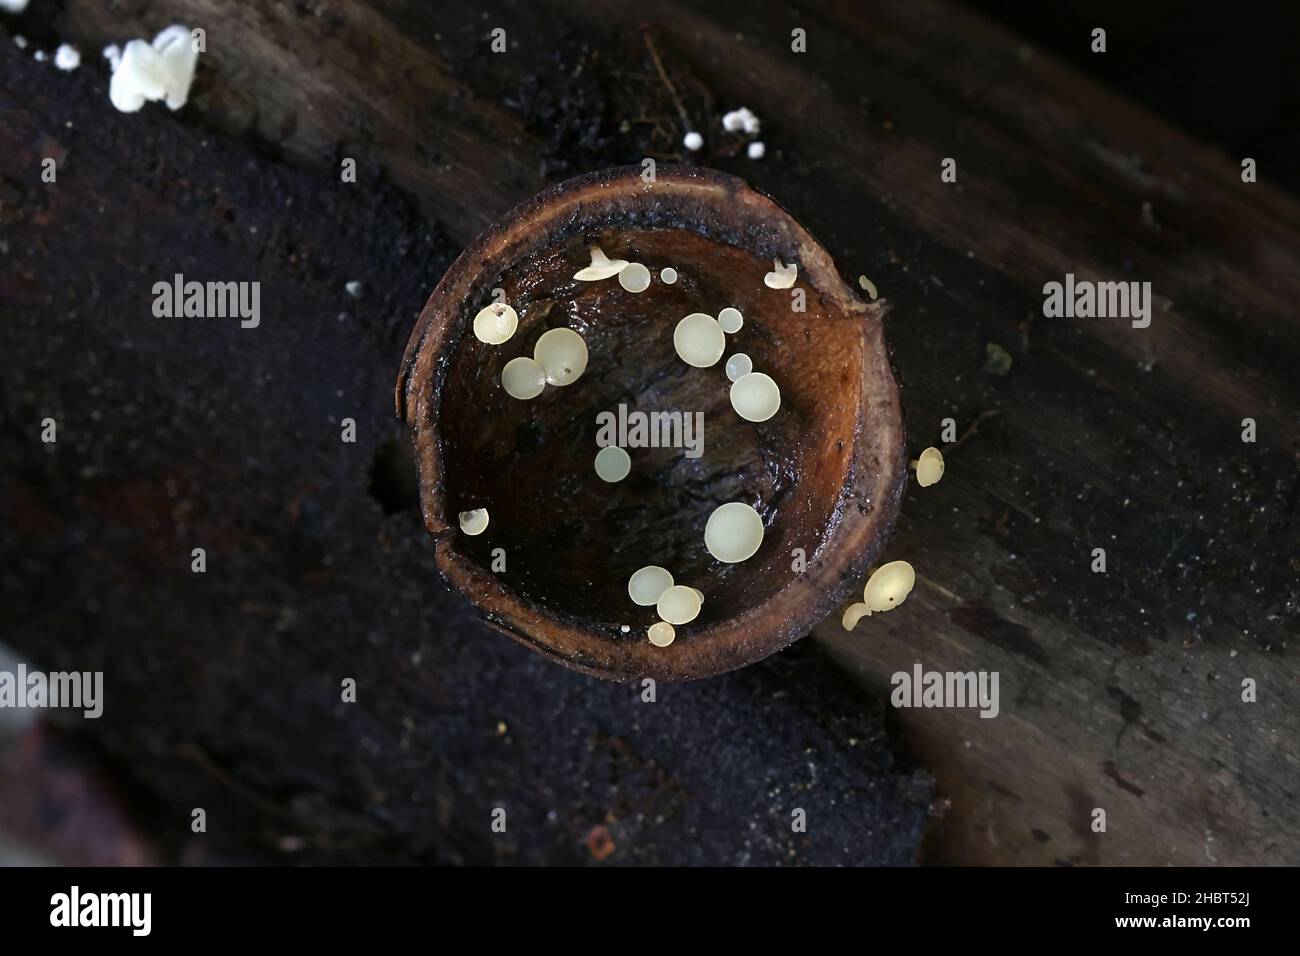 Hymenoscyphus fructigenus, commonly known as nut disco, wild fungus from Finland Stock Photo